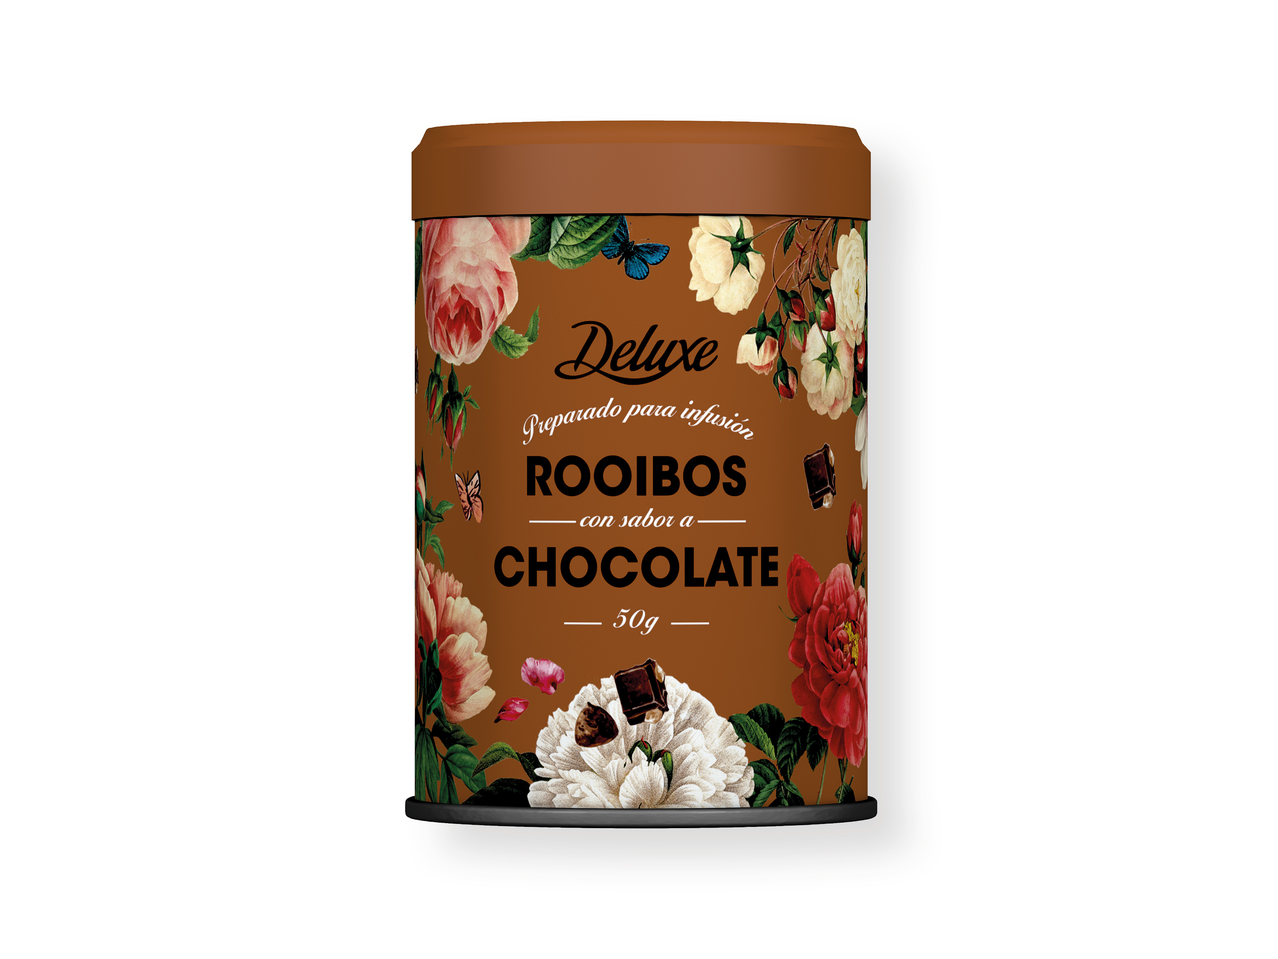 ‘Deluxe(R)' Té verde con sabor a champagne y fresas / rooibos con sabor a chocolate